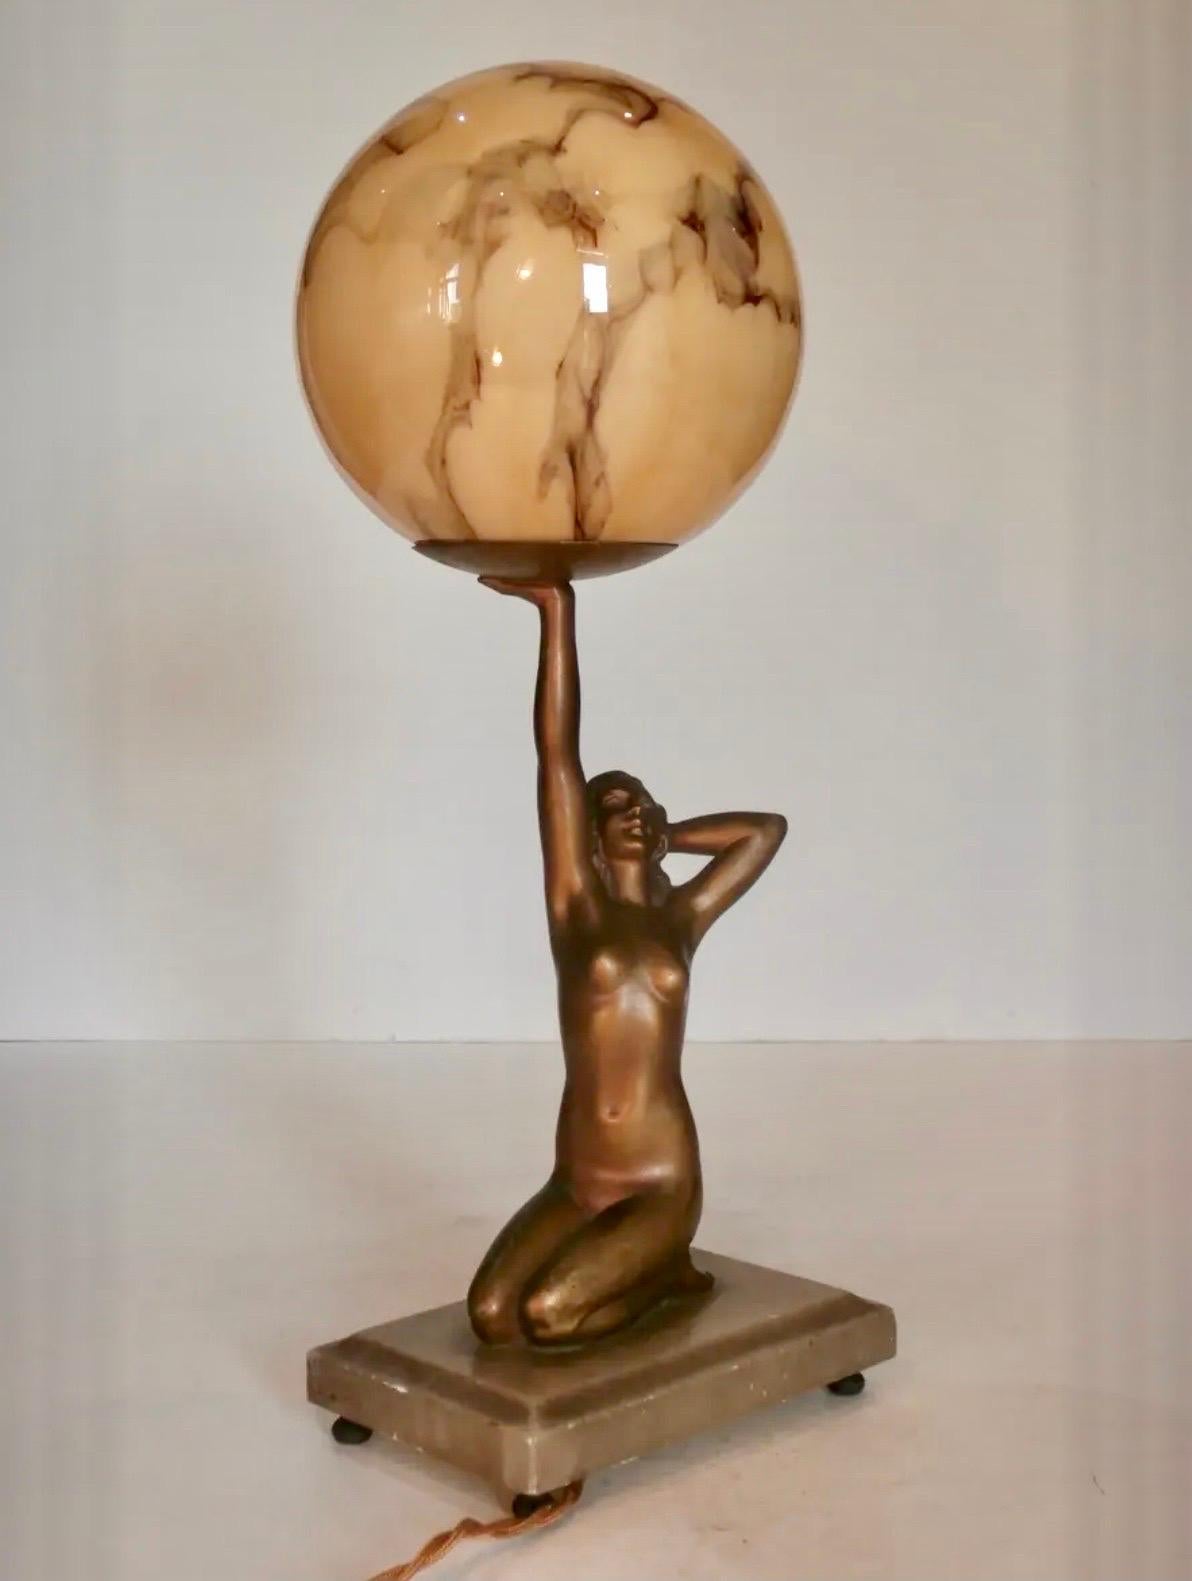 Lovely Art Deco Antique Lady lamp with marbled globe
Circa 1930
40cm x 15cm x 15cm
£850.